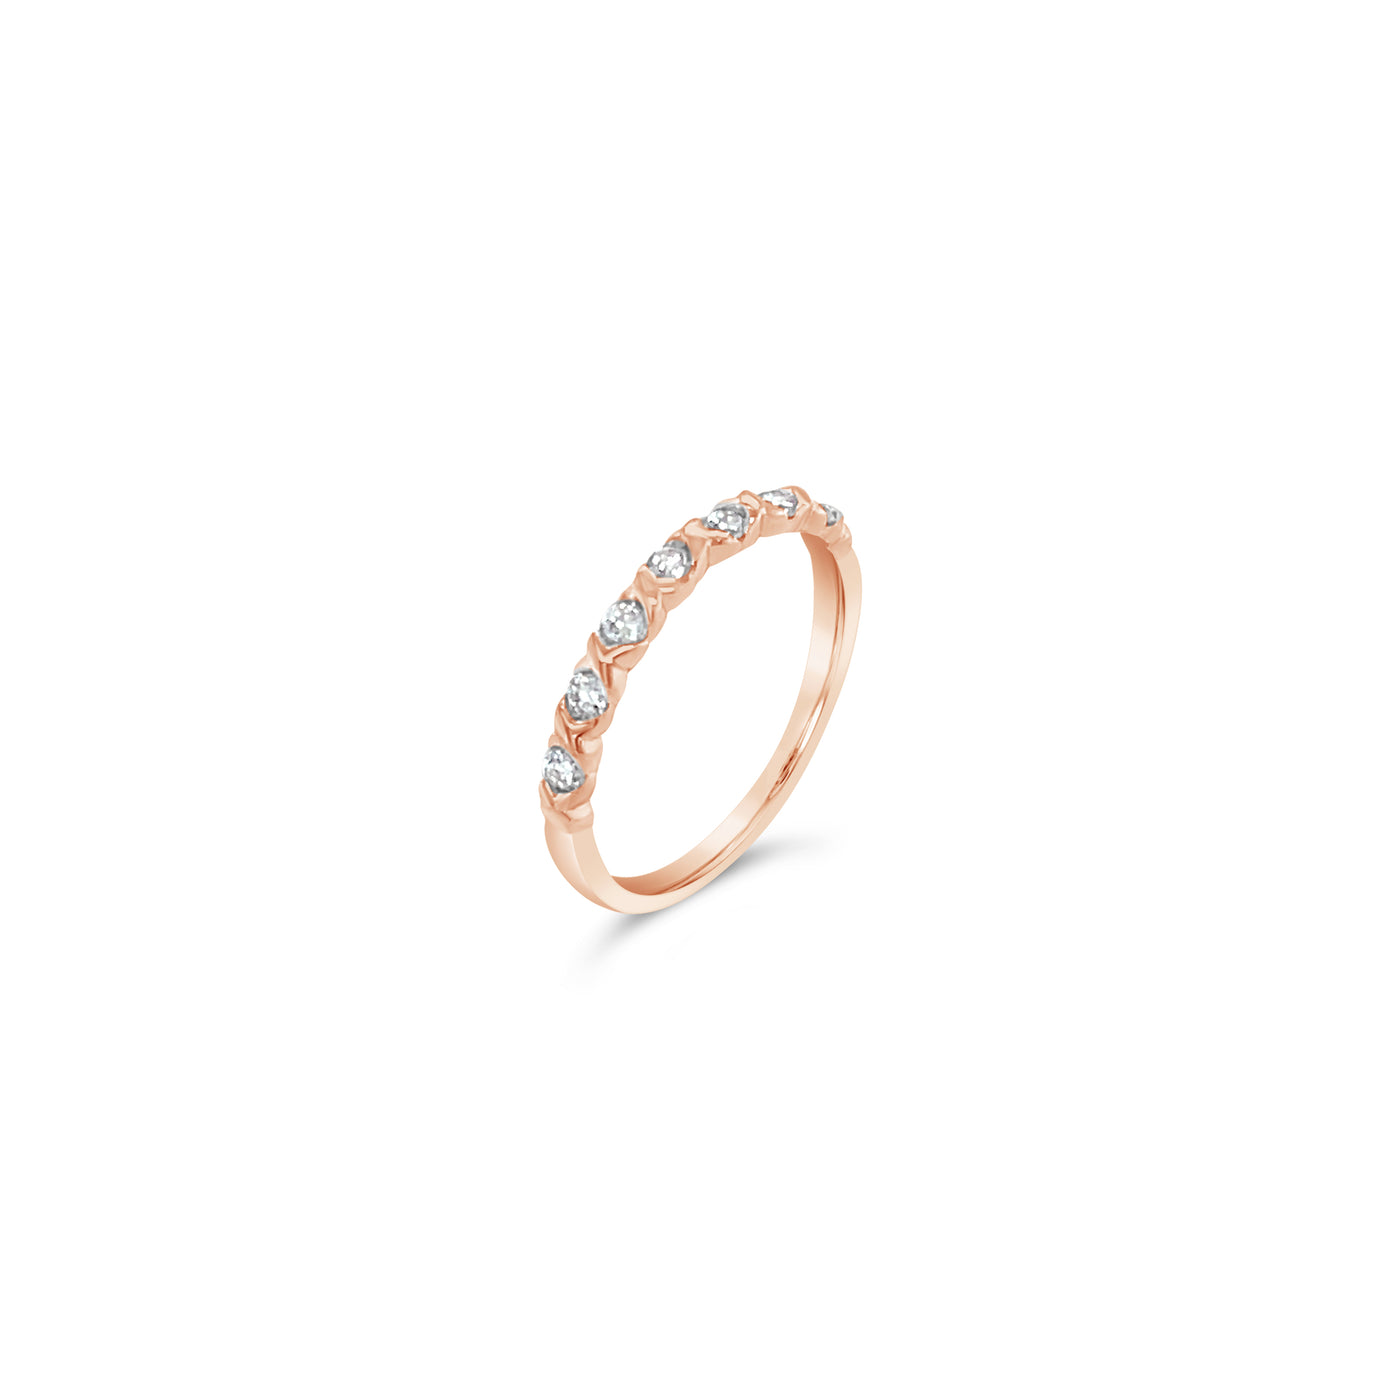 10Ct Rose Gold Ring With Round Brilliant Cut Diamonds Twist Set